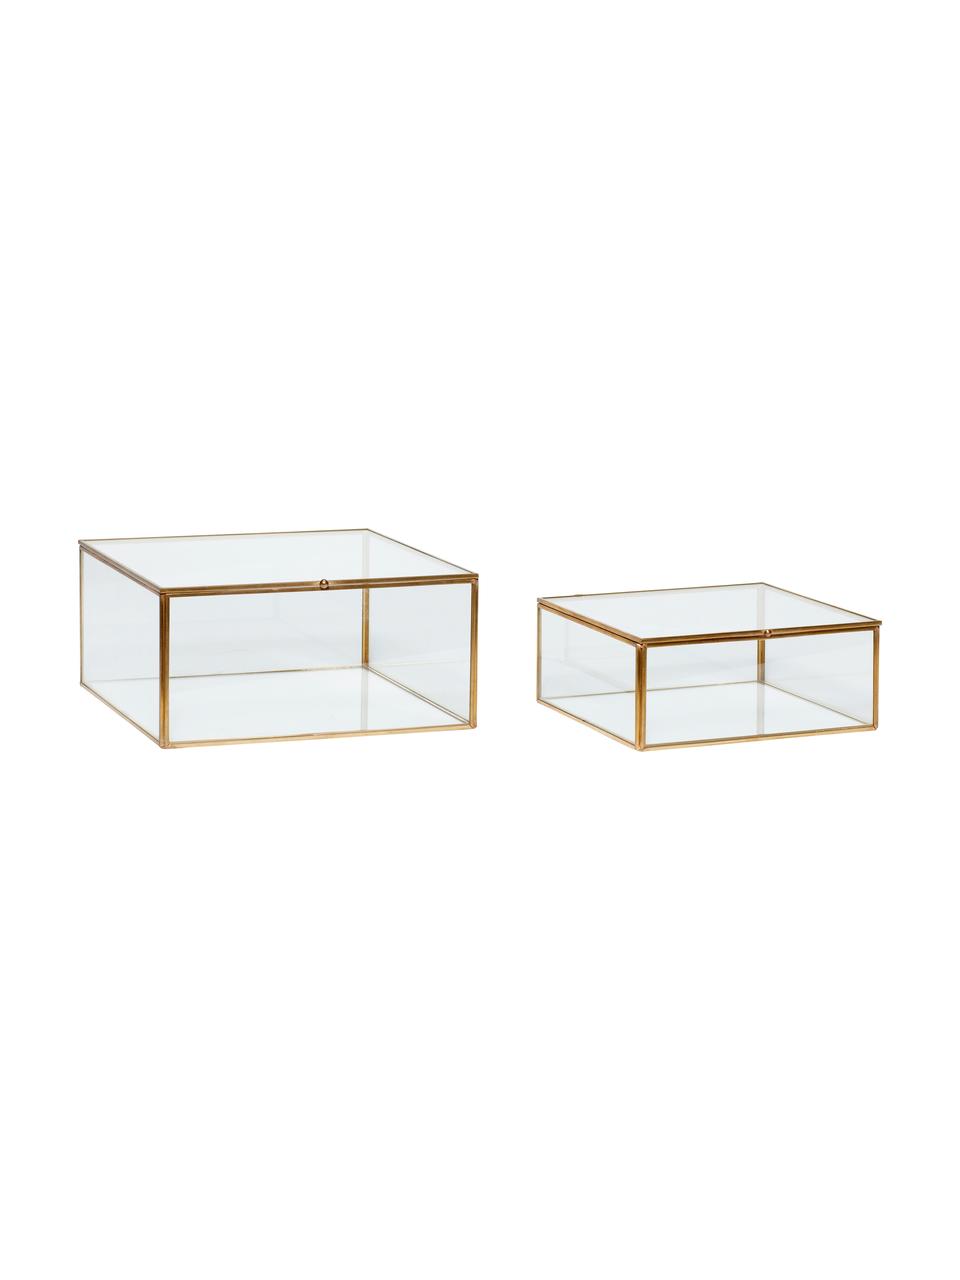 Set de cajas Karie, 2 pzas., Caja: vidrio, Latón, transparente, Set de diferentes tamaños